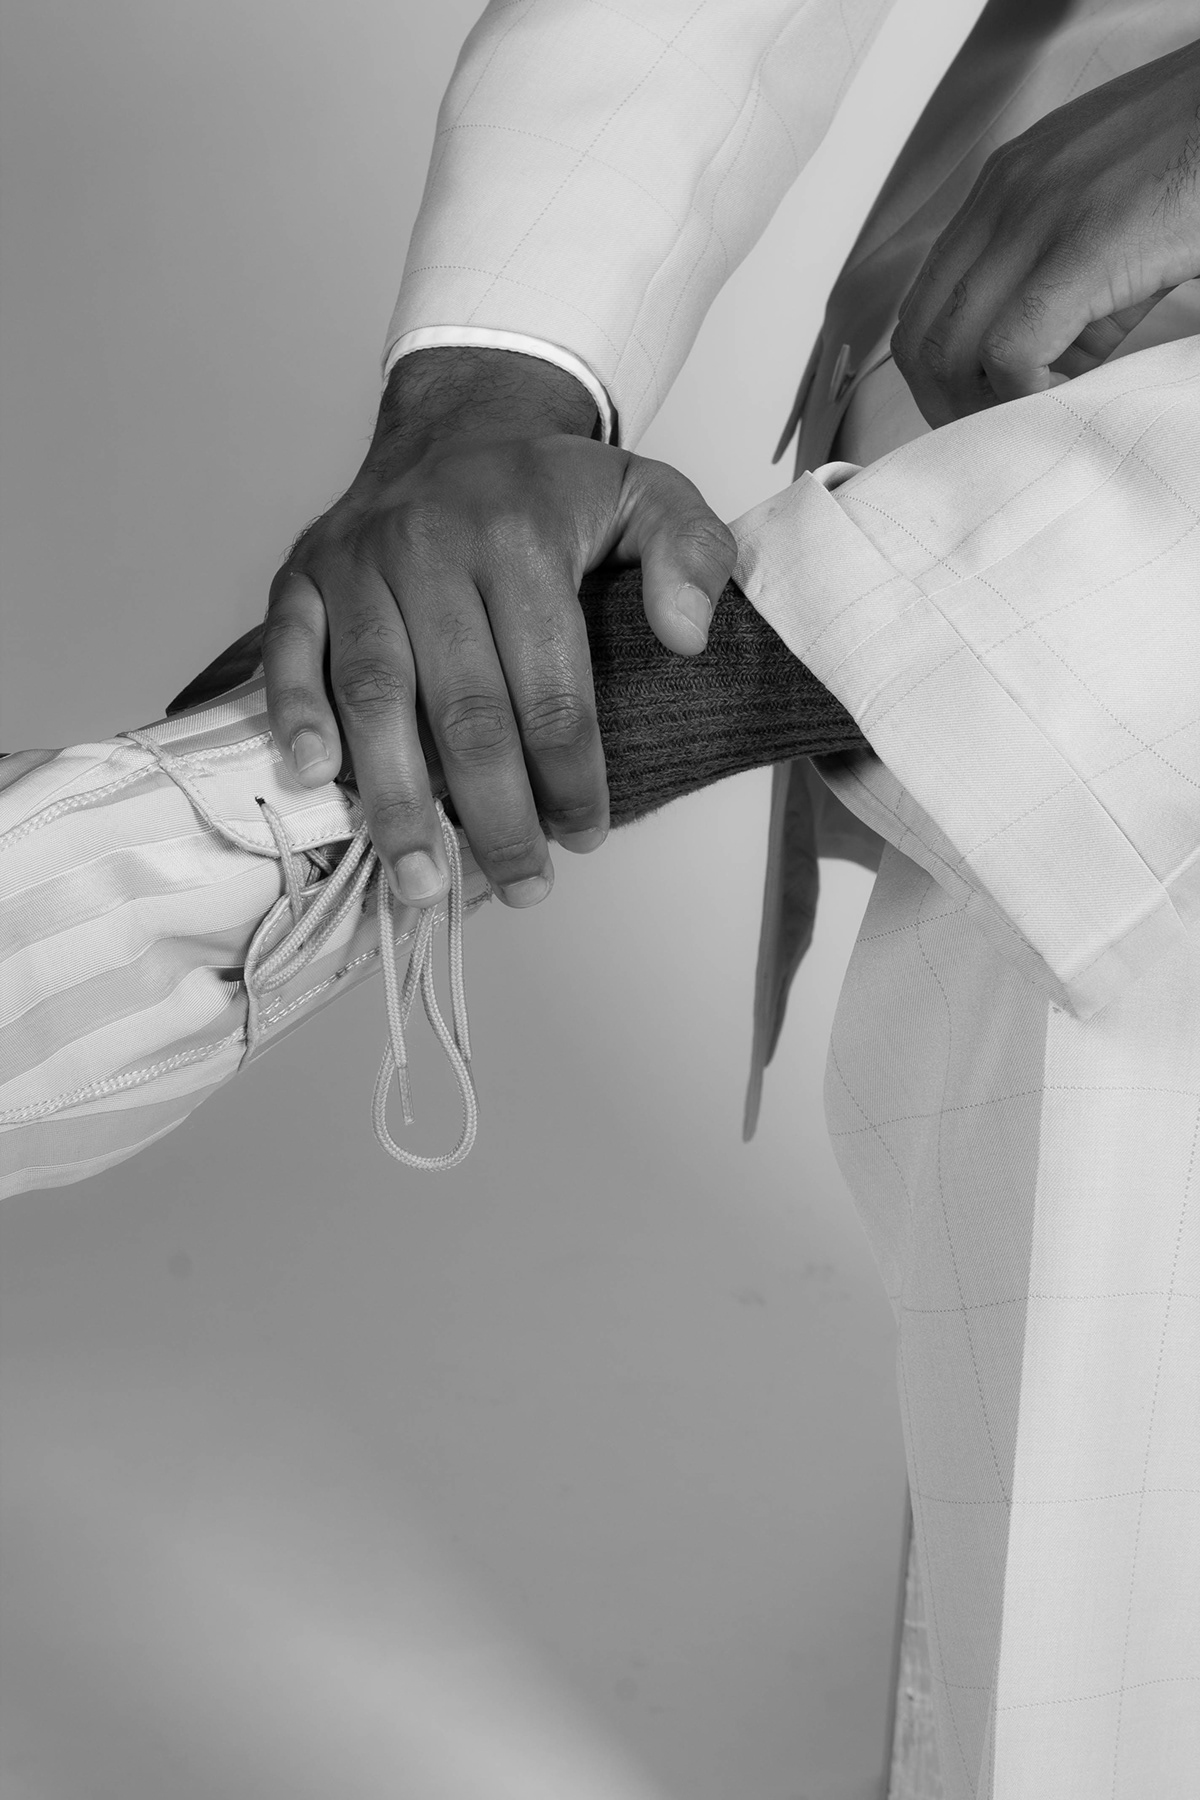 suit and tie Black&white studio lighting male model